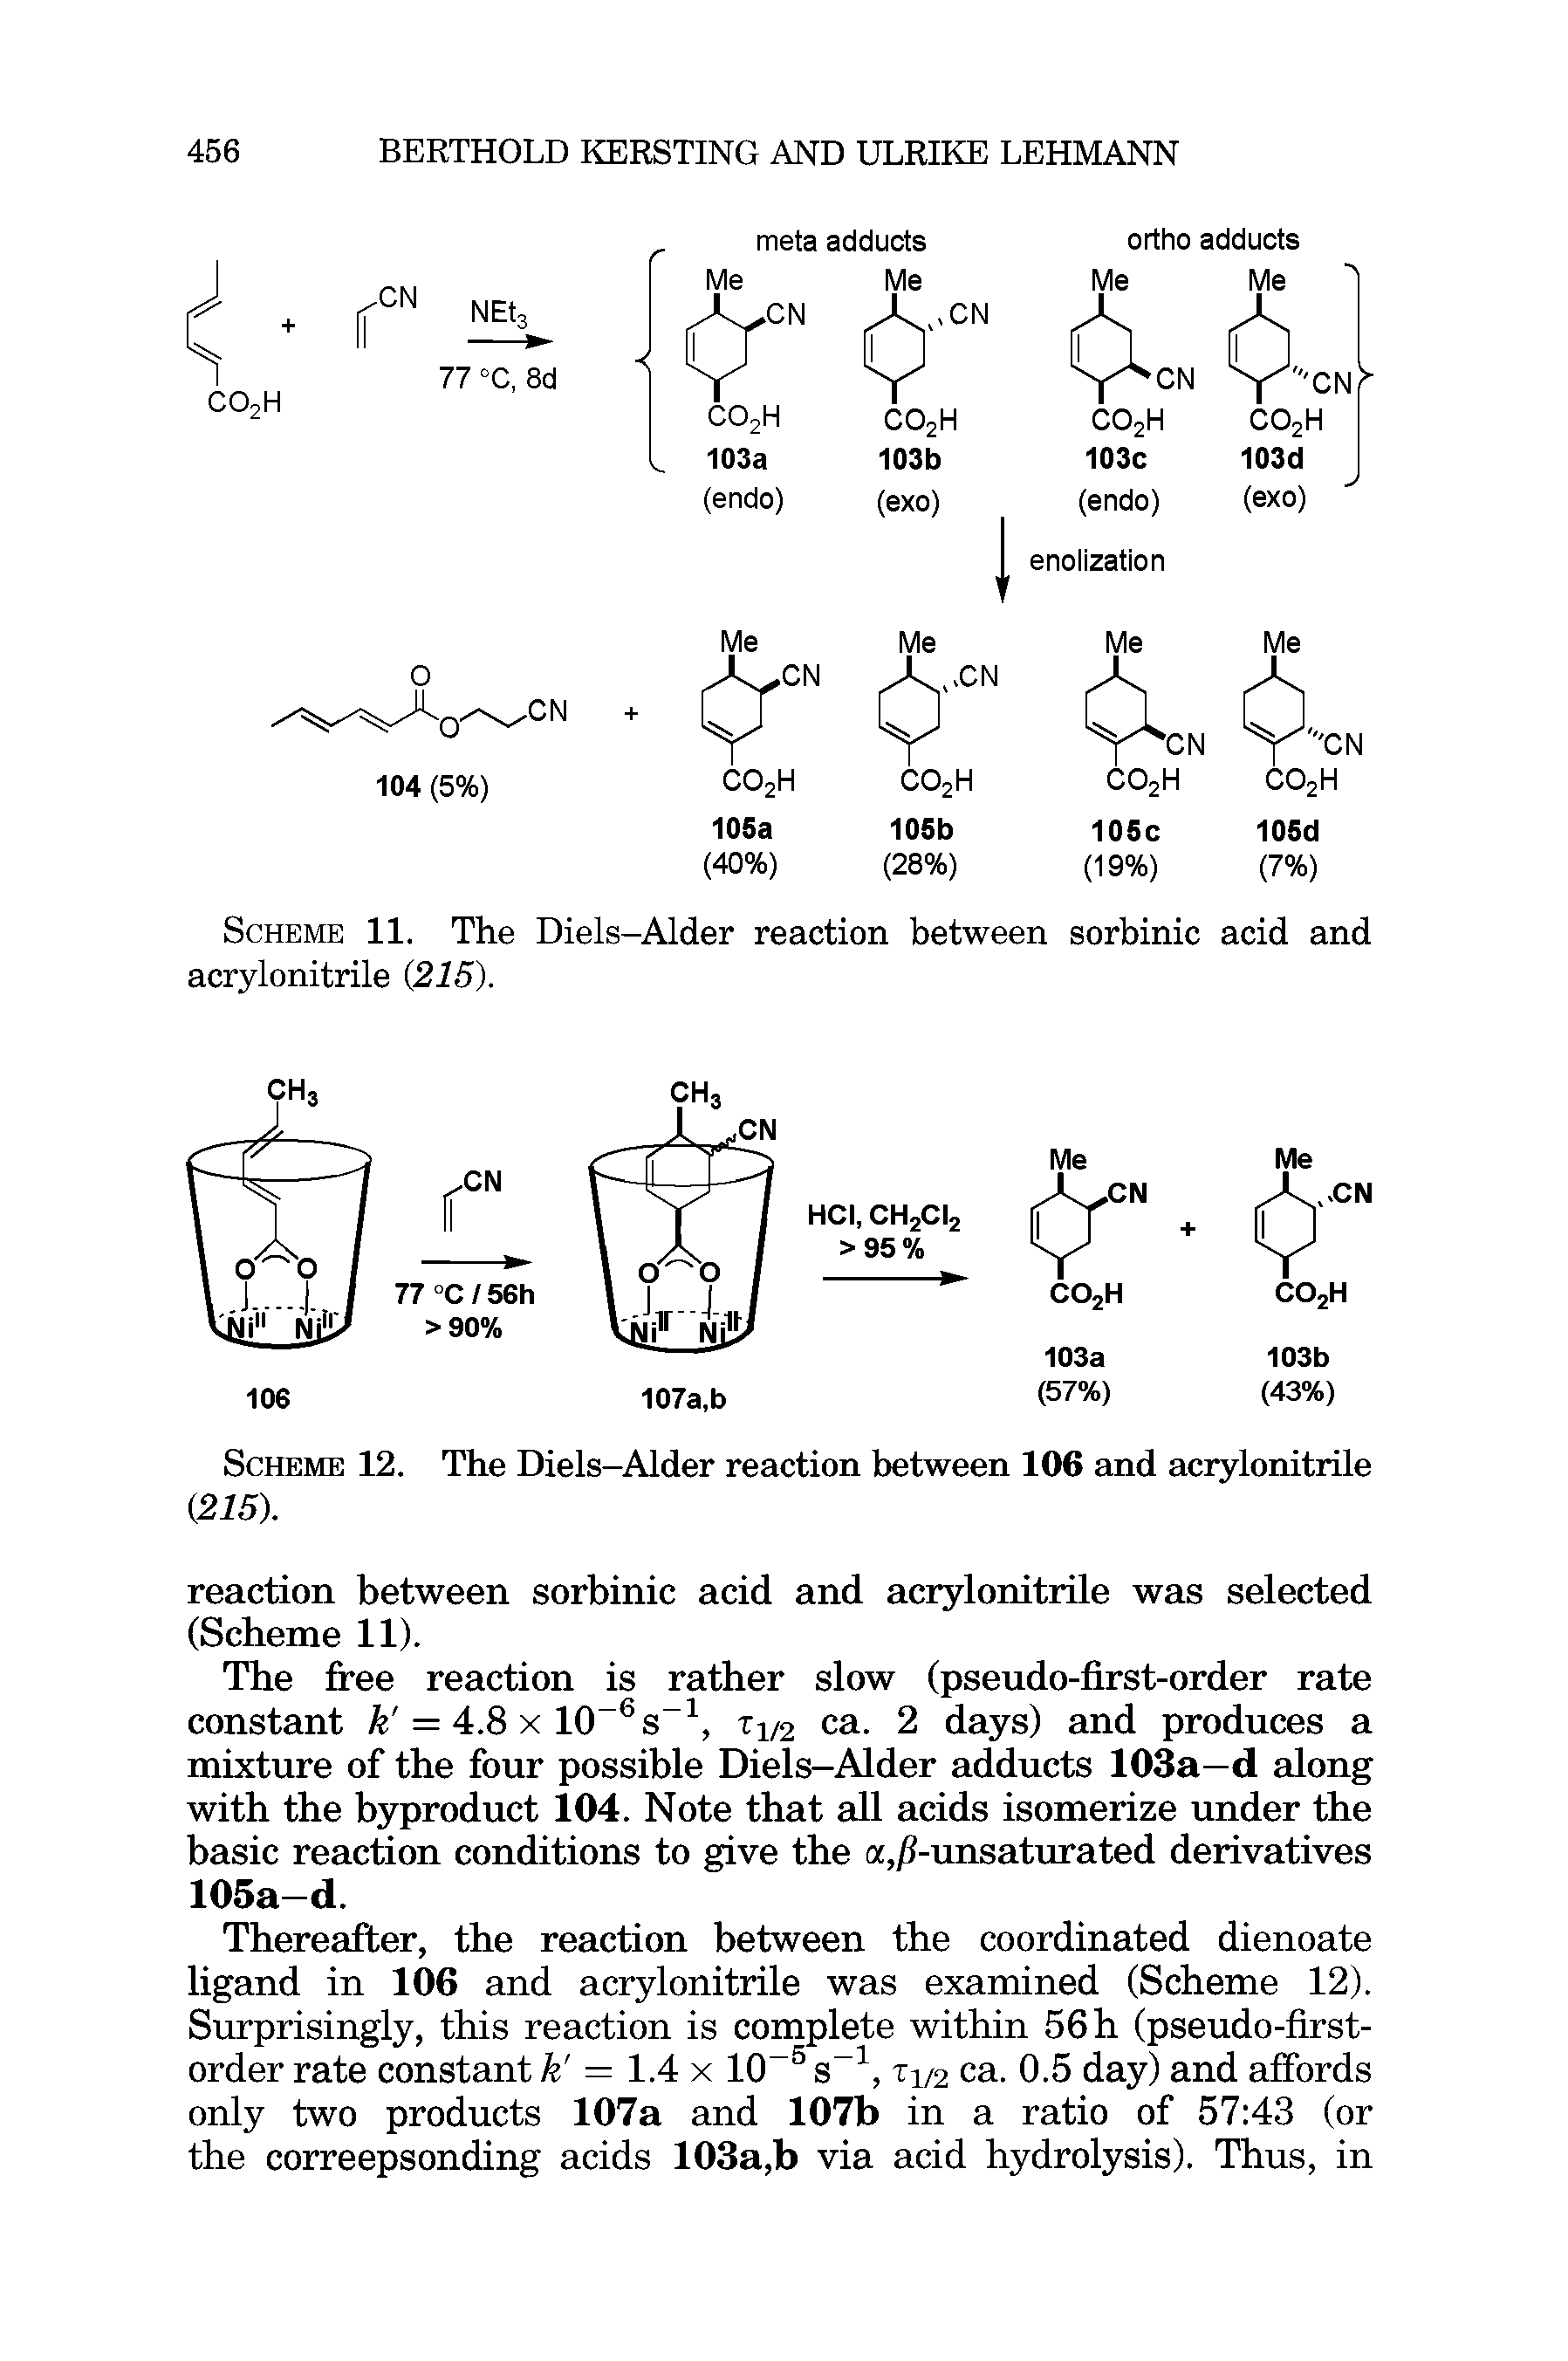 Scheme 11. The Diels-Alder reaction between sorbinic acid and acrylonitrile (215).